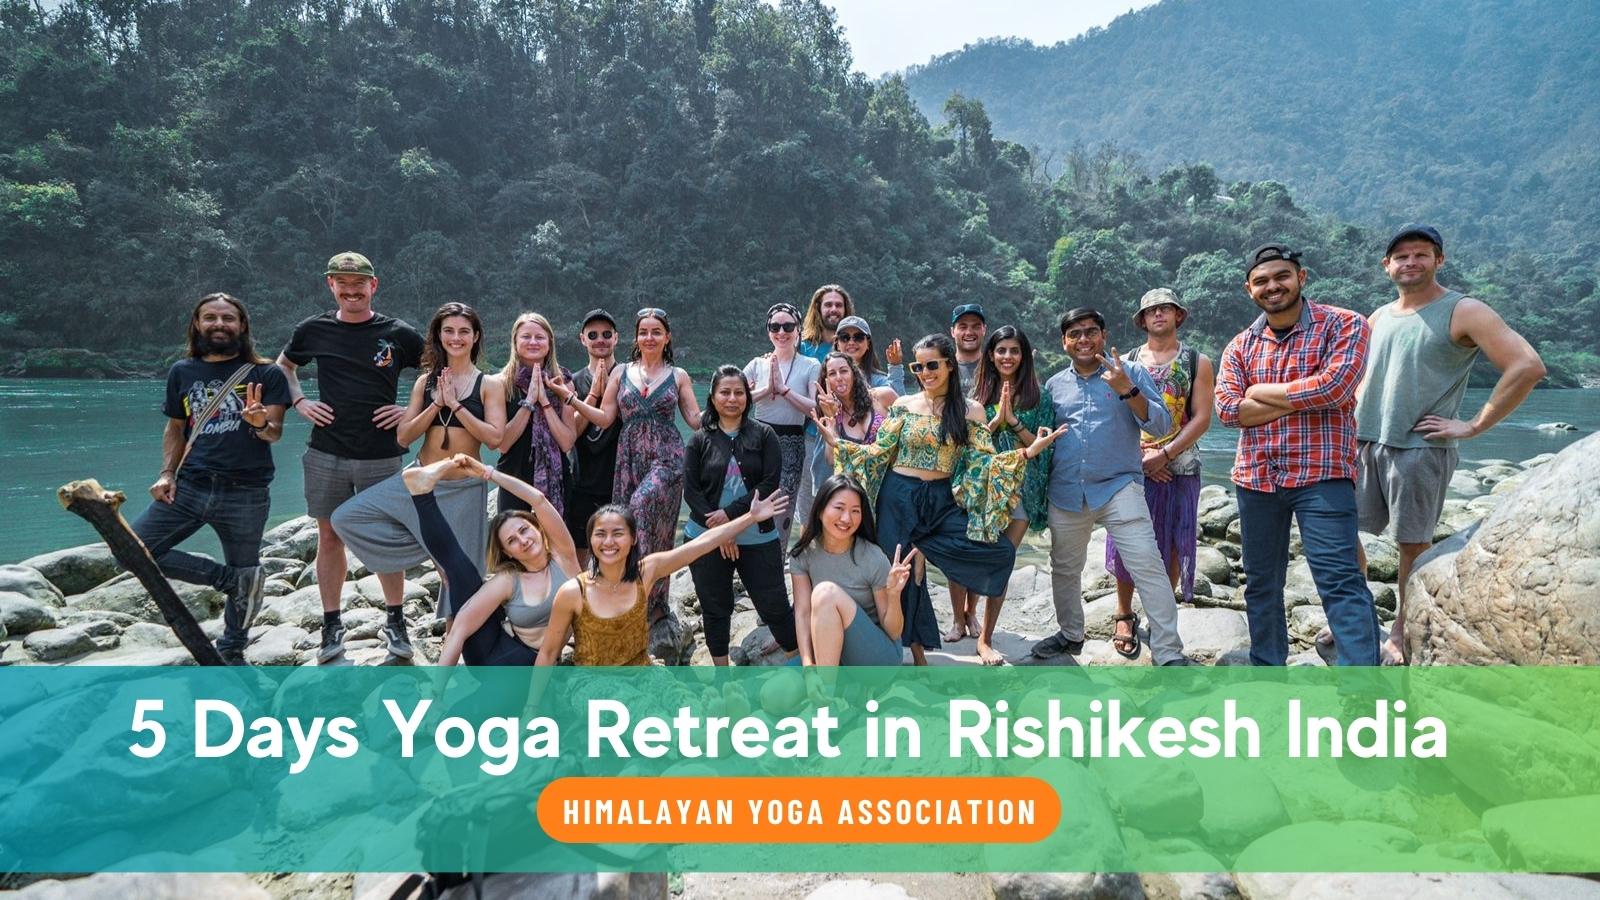 6 Days Yoga Retreat in Rishikesh India